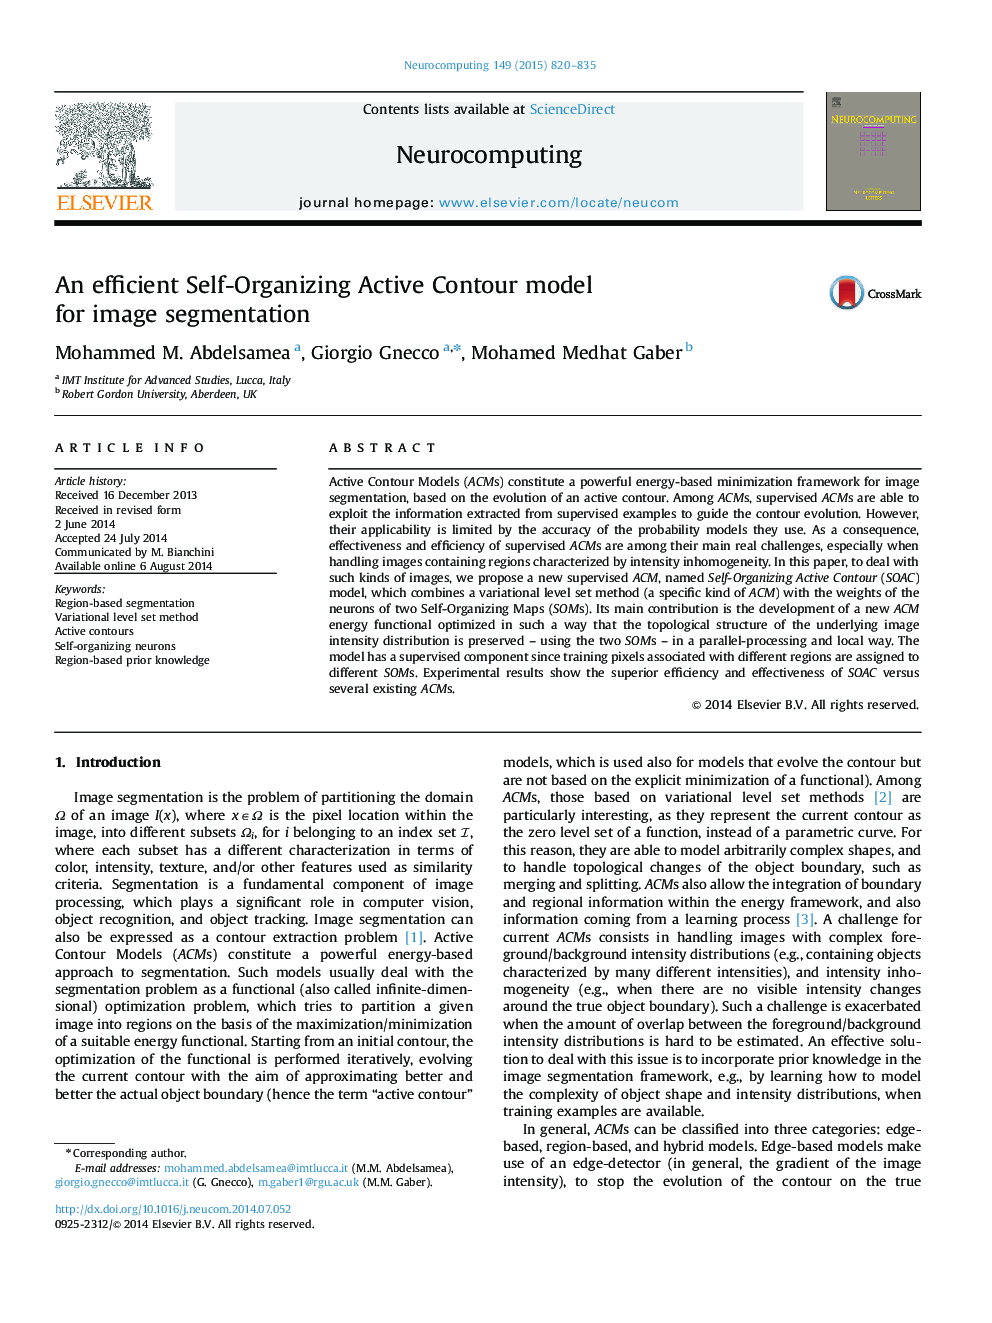 An efficient Self-Organizing Active Contour model for image segmentation